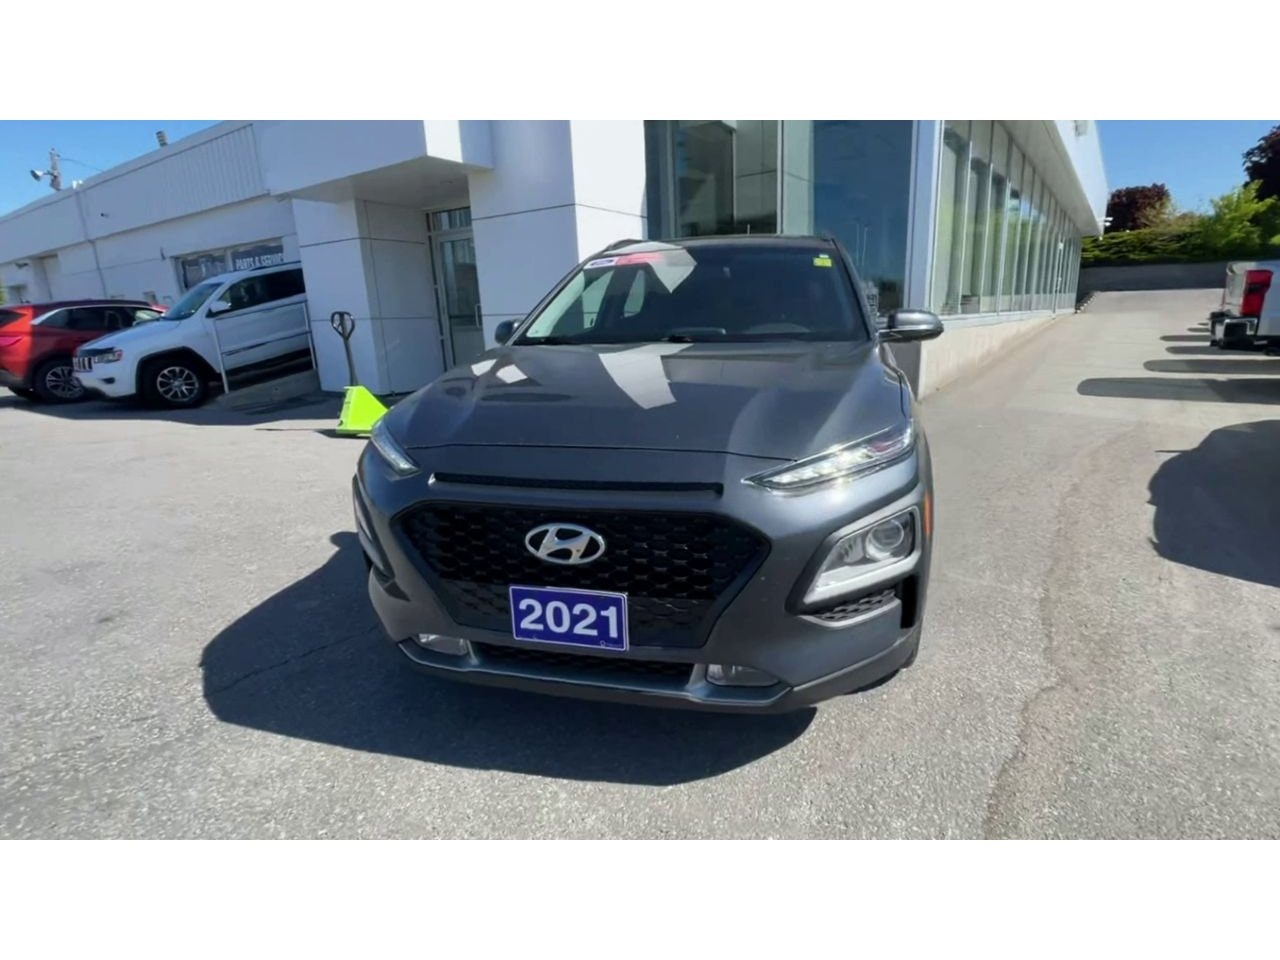 2021 Hyundai Kona - 20857A Full Image 3